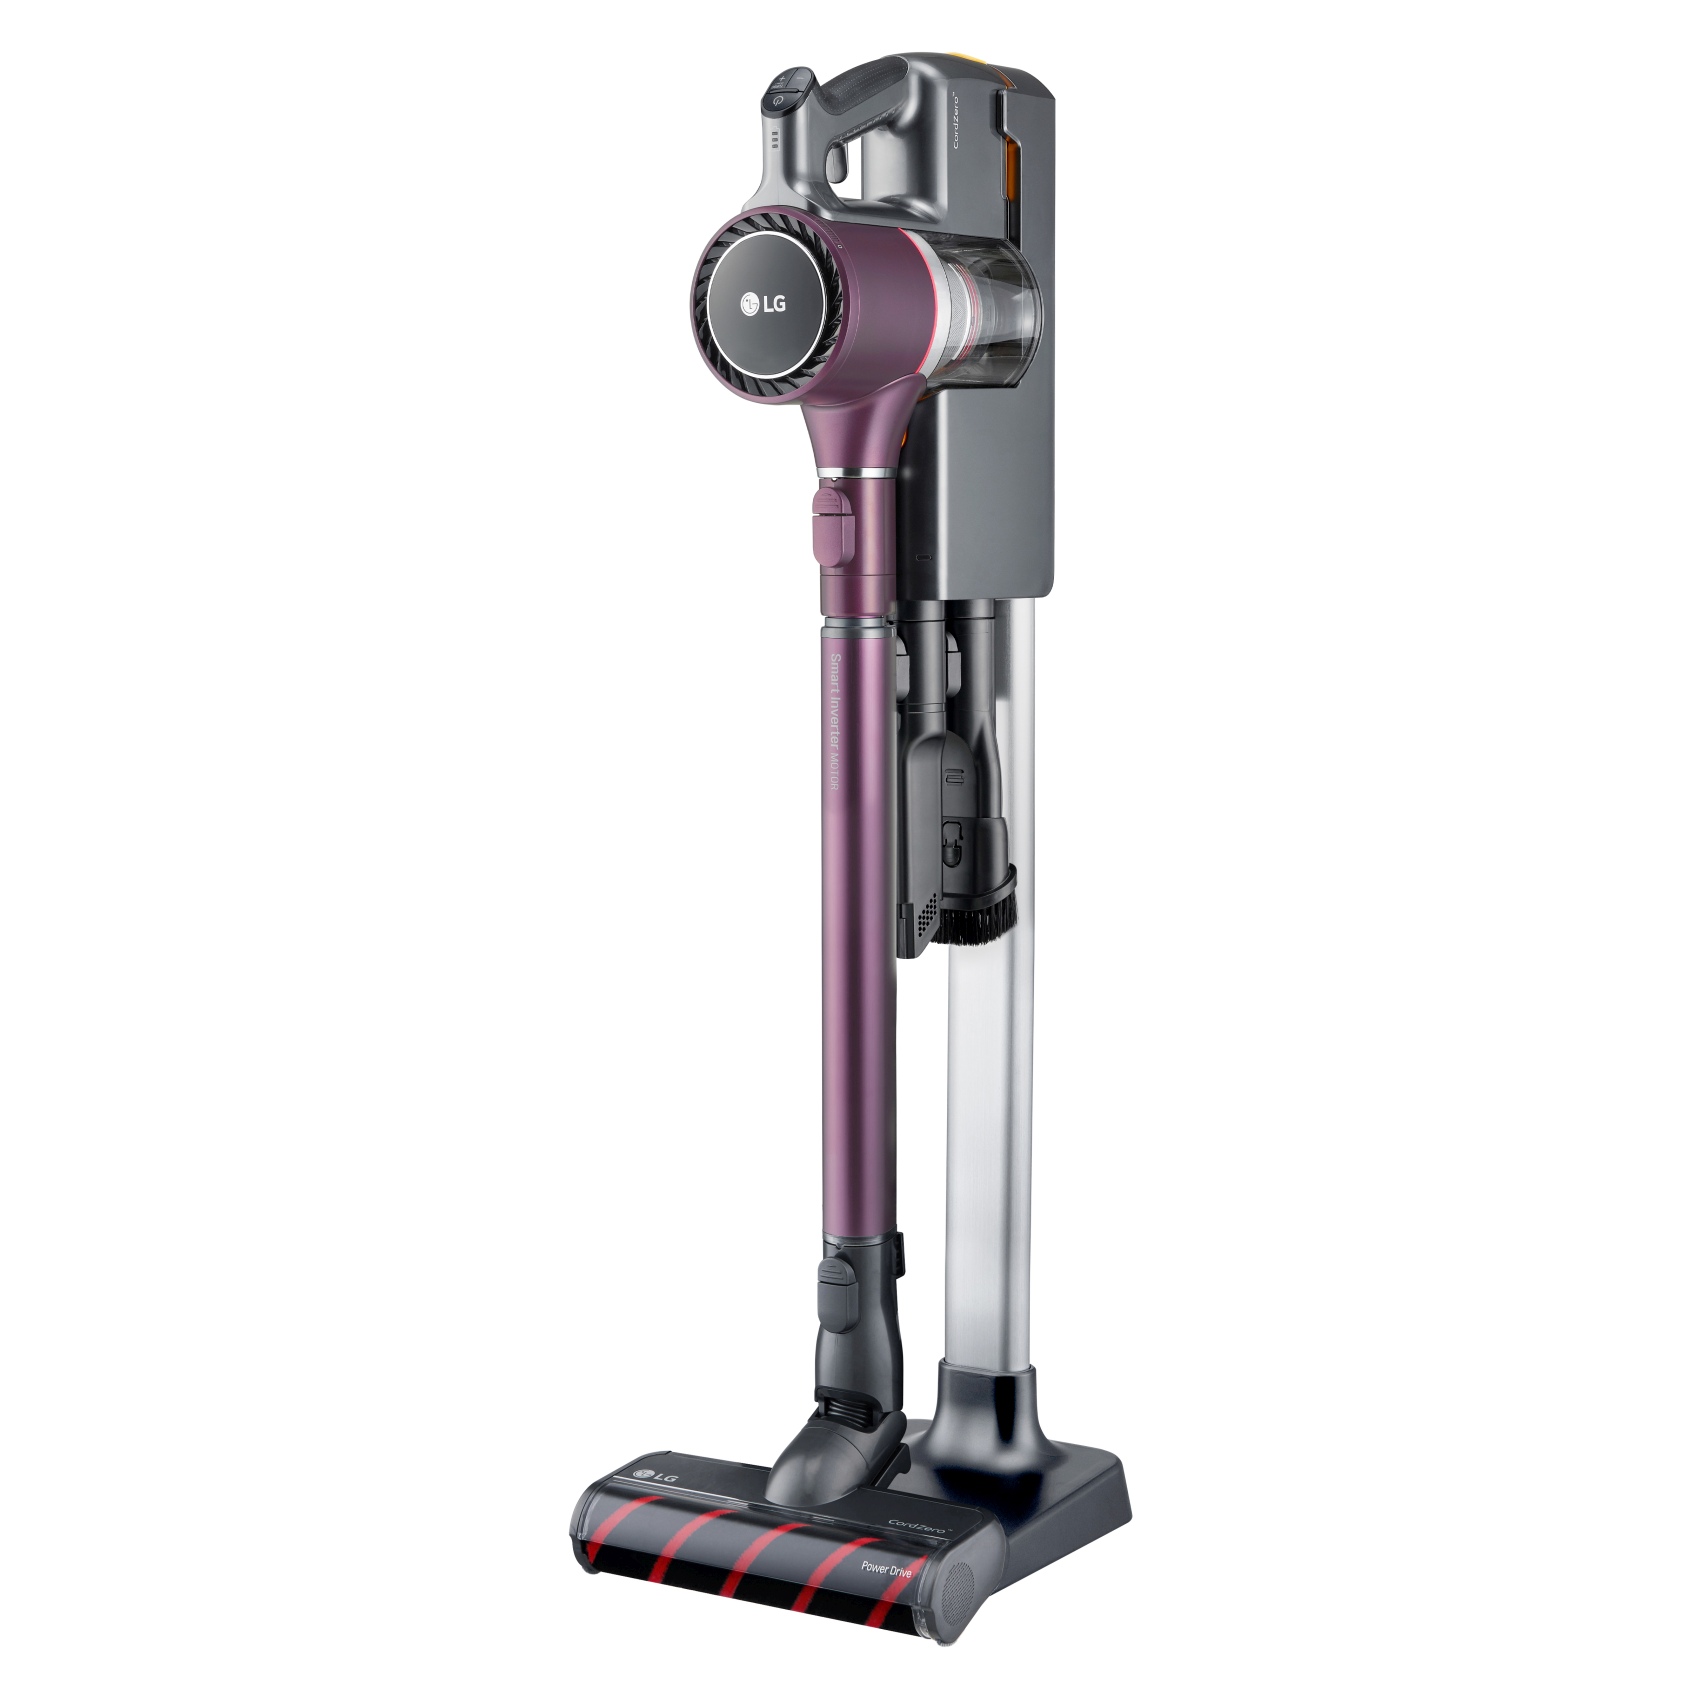 LG CordZero A9N-Lite Upright Vacuum Cleaner 480W Purple and Black